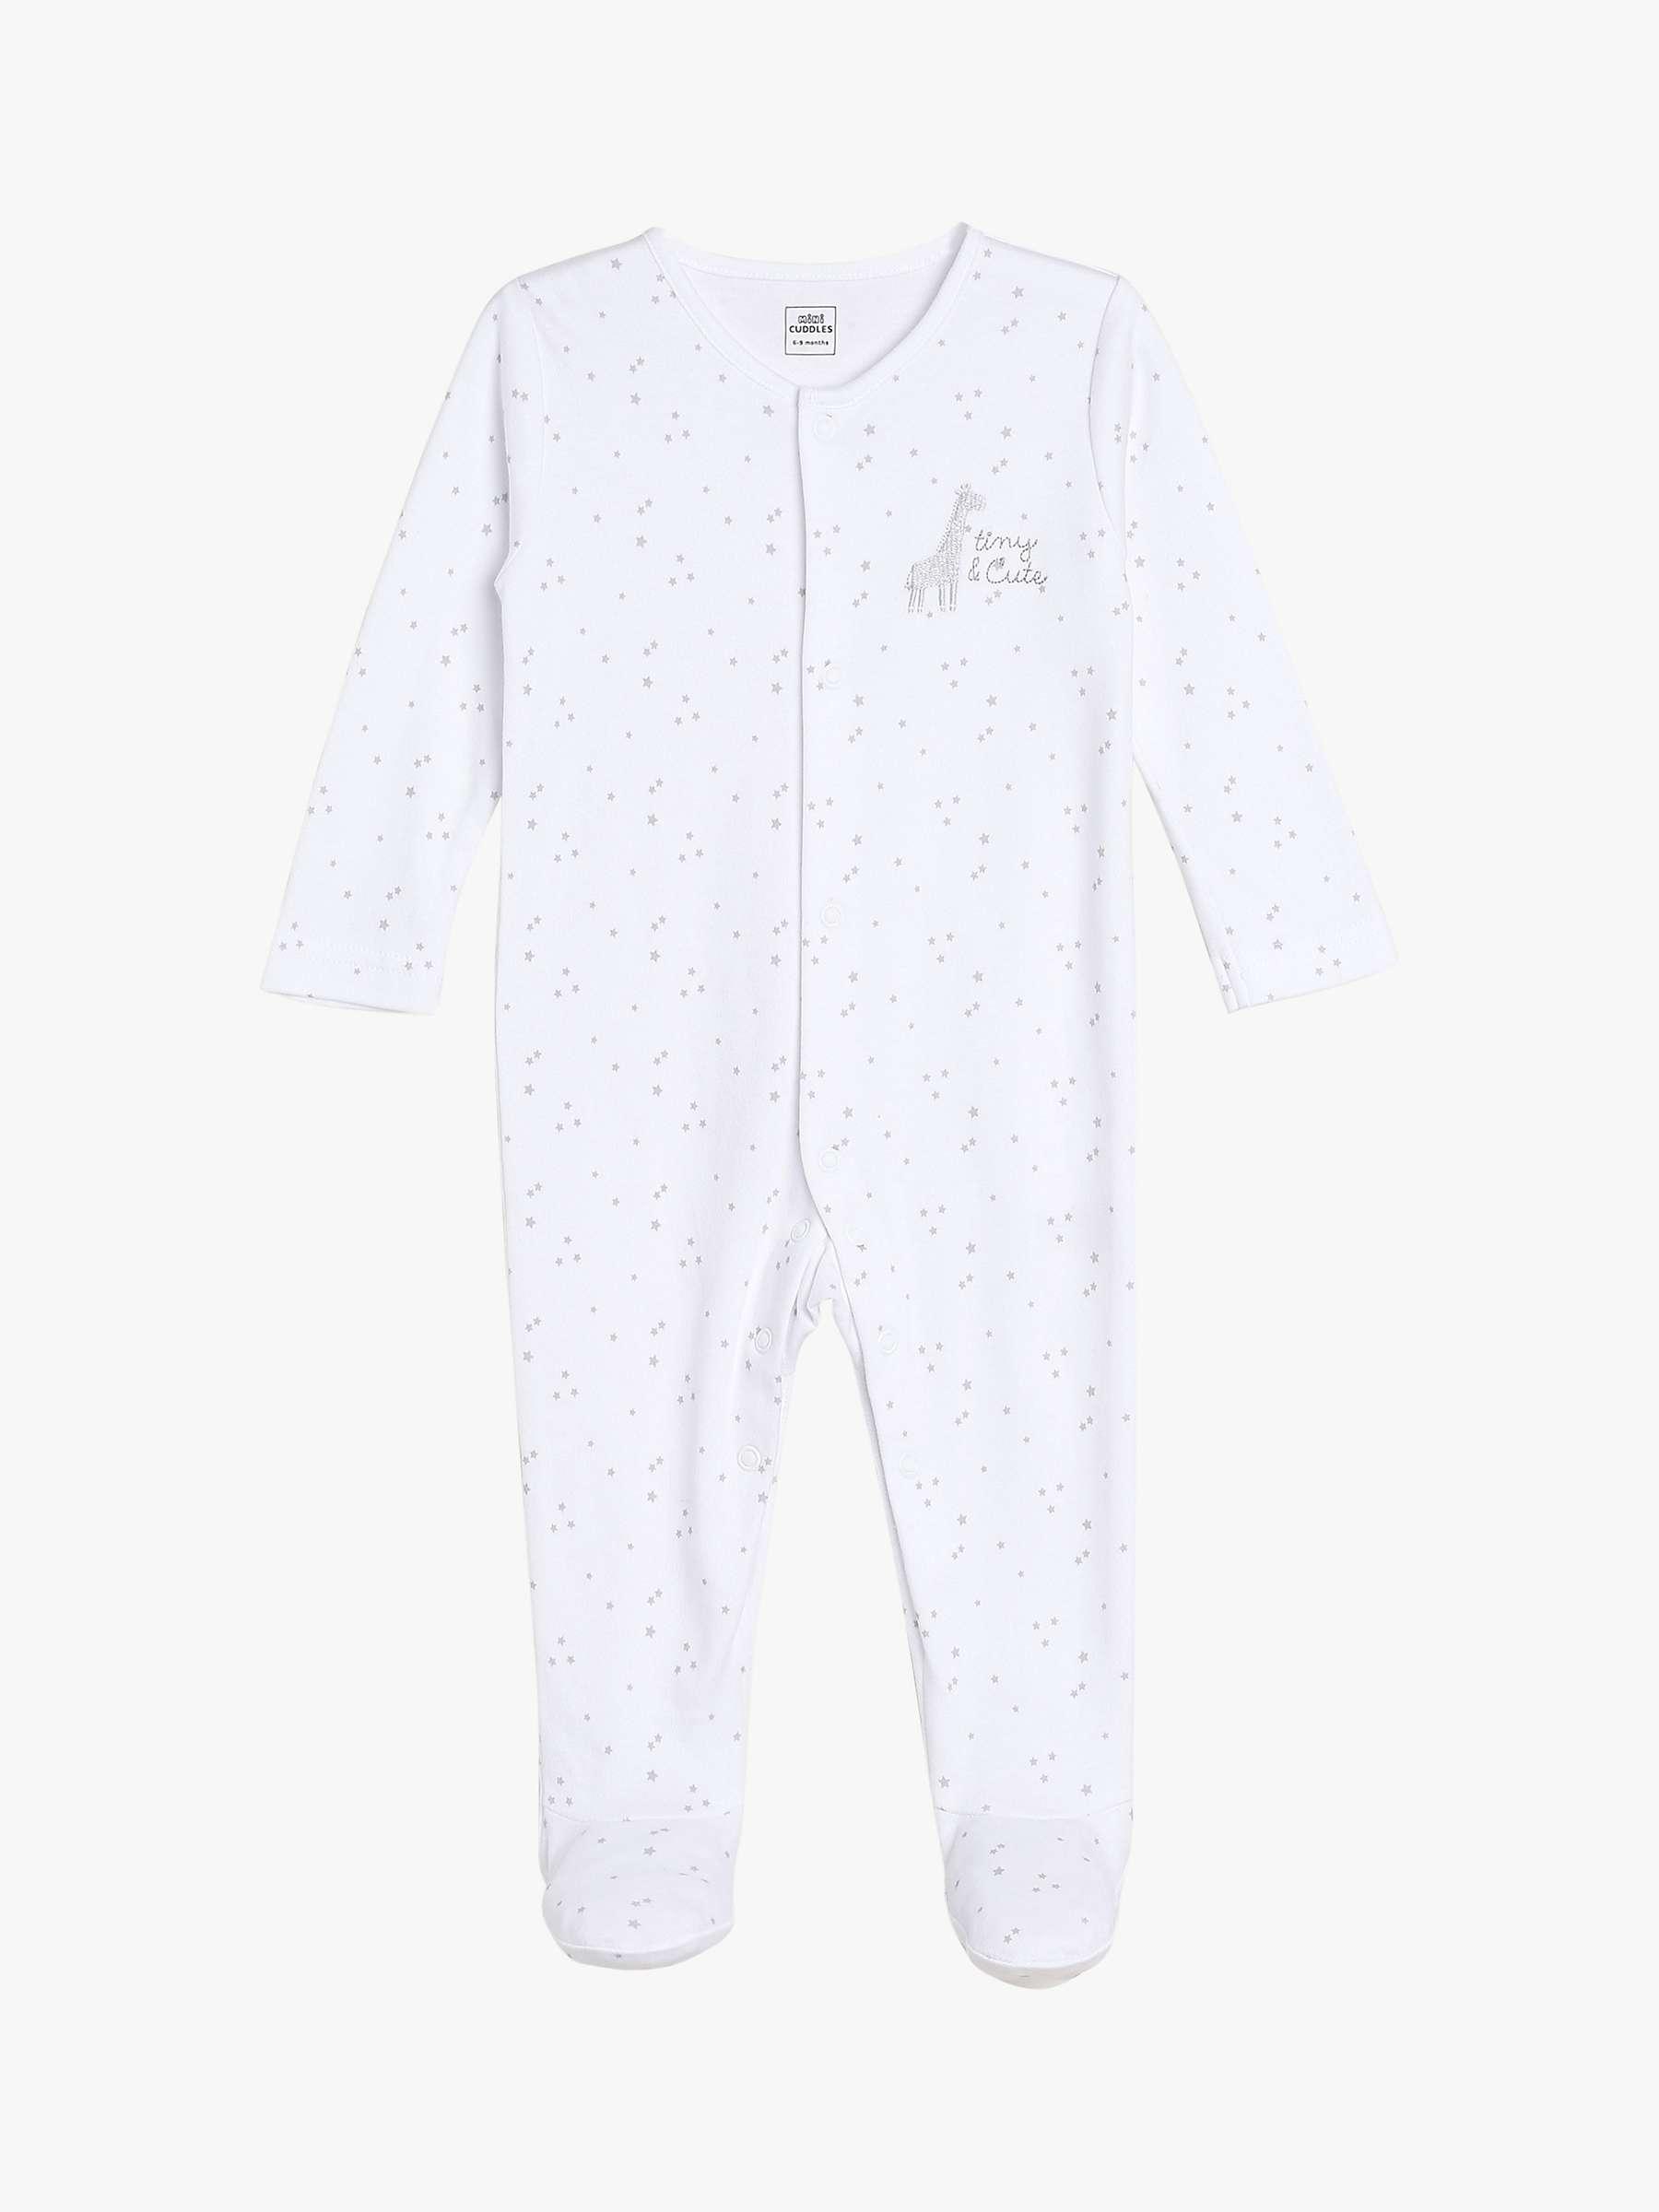 Mini Cuddles Baby Tiny & Cute Sleepsuits, Hat & Gloves Set, White/Grey ...